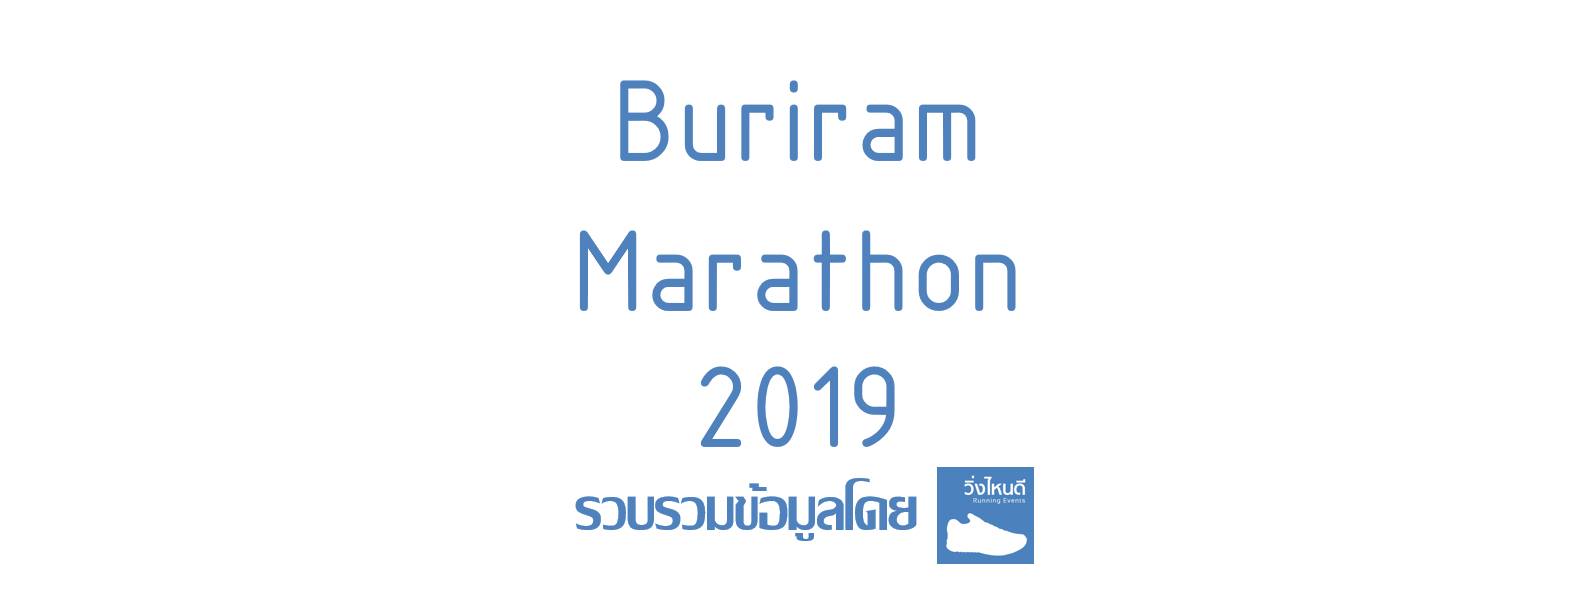 Buriram Marathon 2019